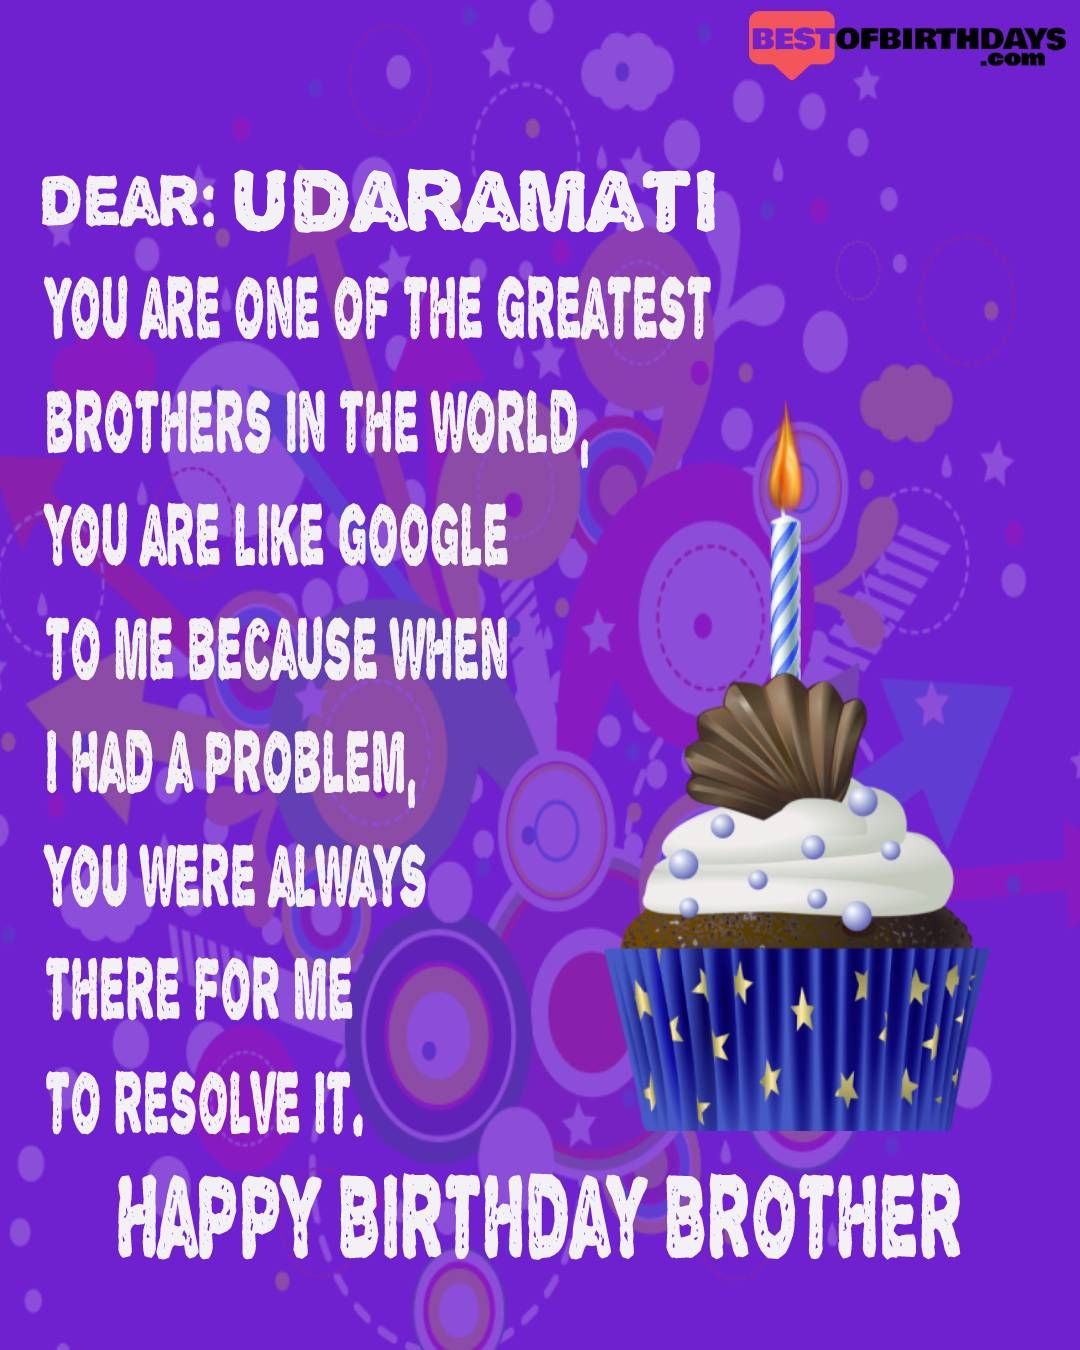 Happy birthday udaramati bhai brother bro